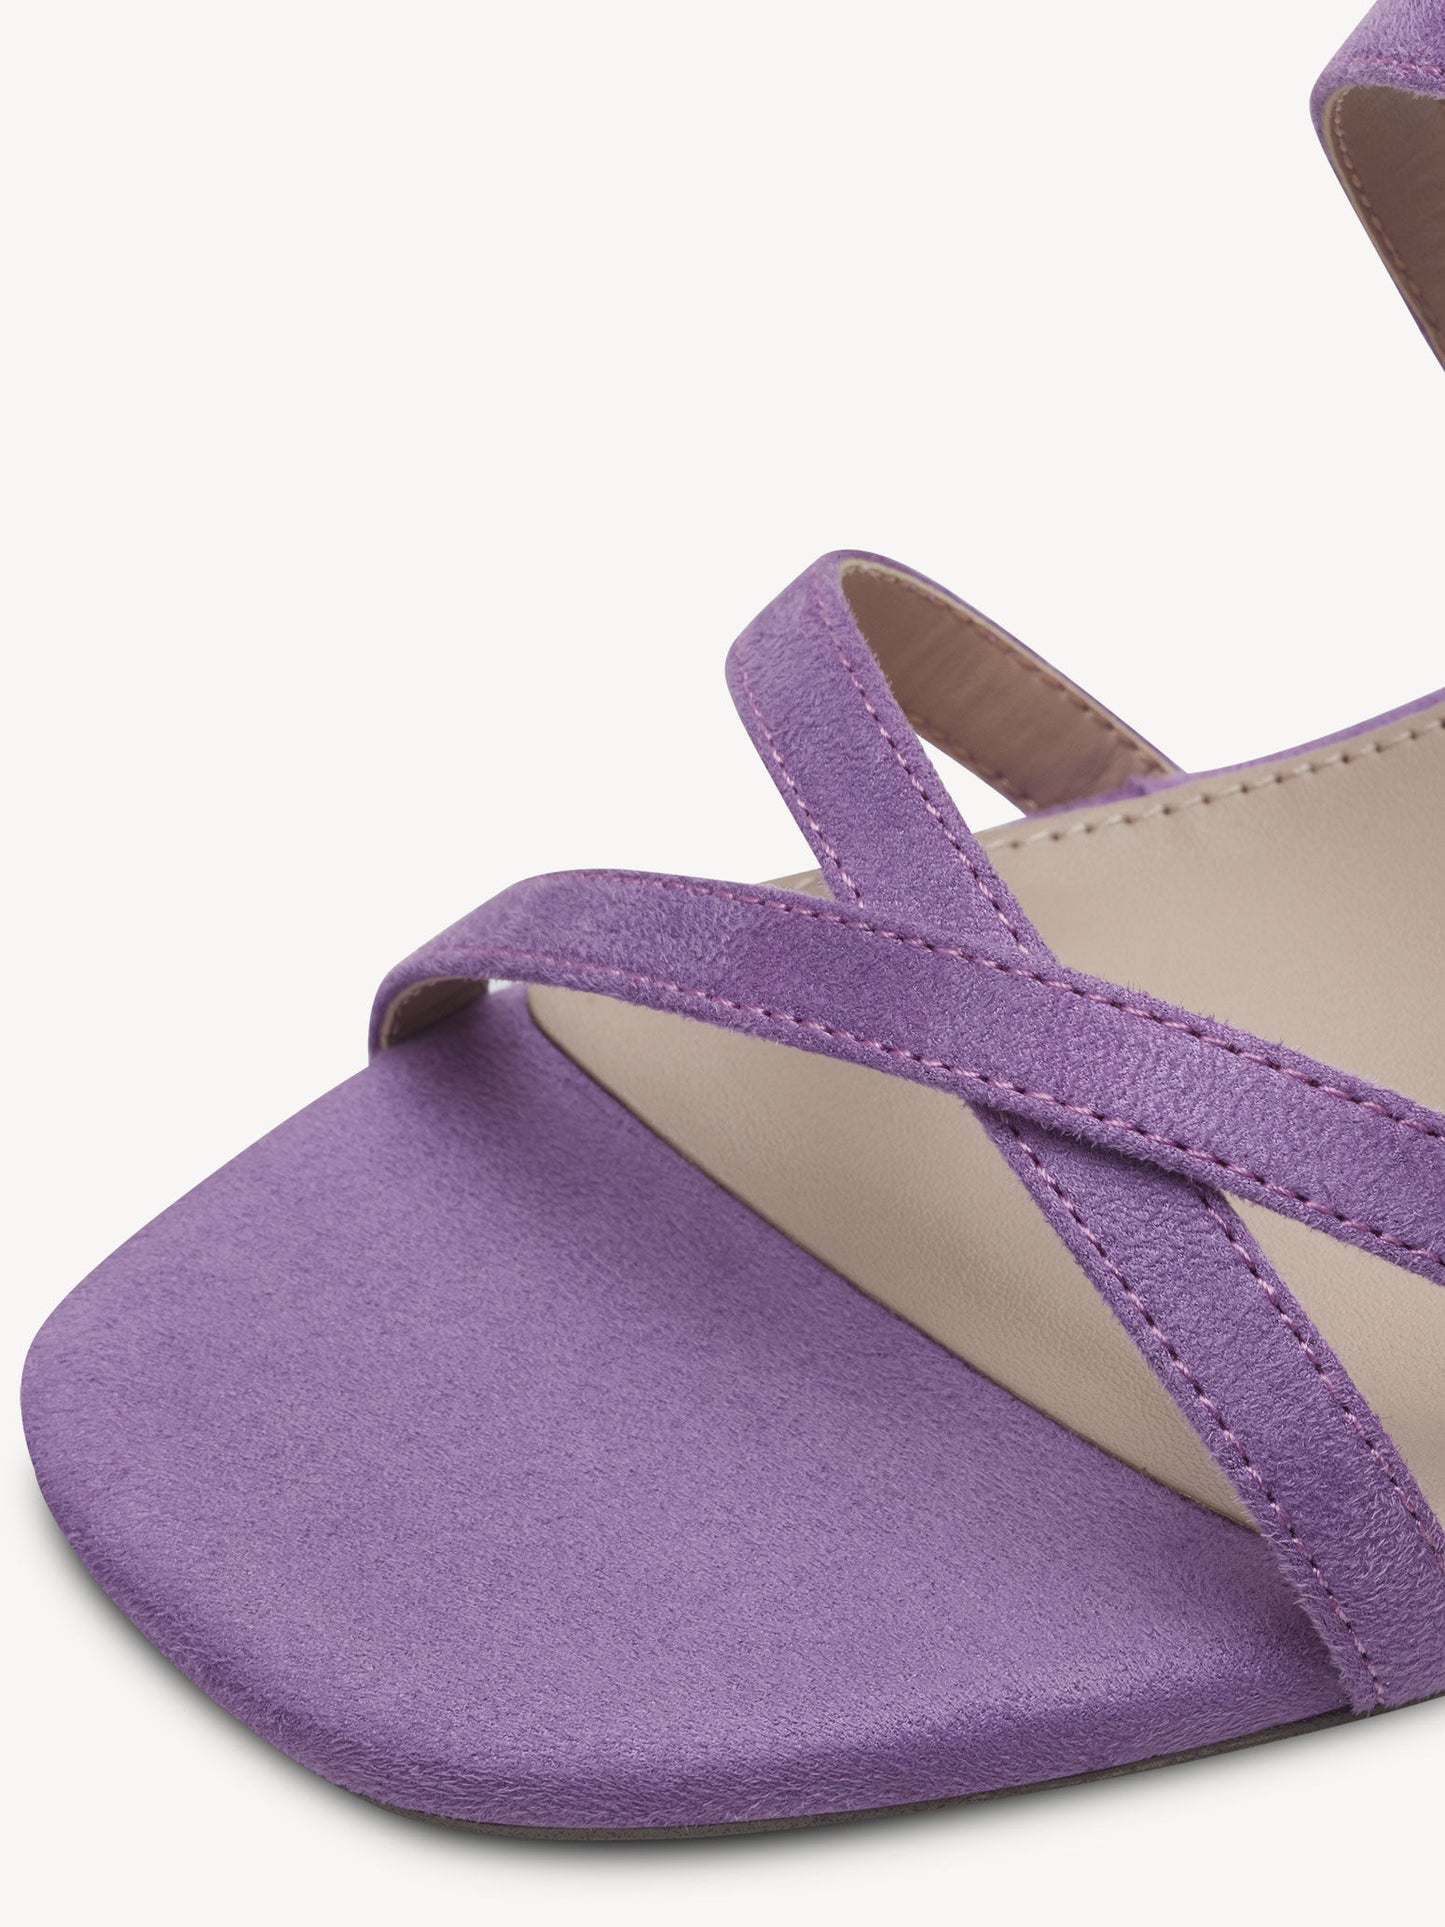 Tamaris Women's 1-28204-42 Heeled Leather Sandals Light Purple